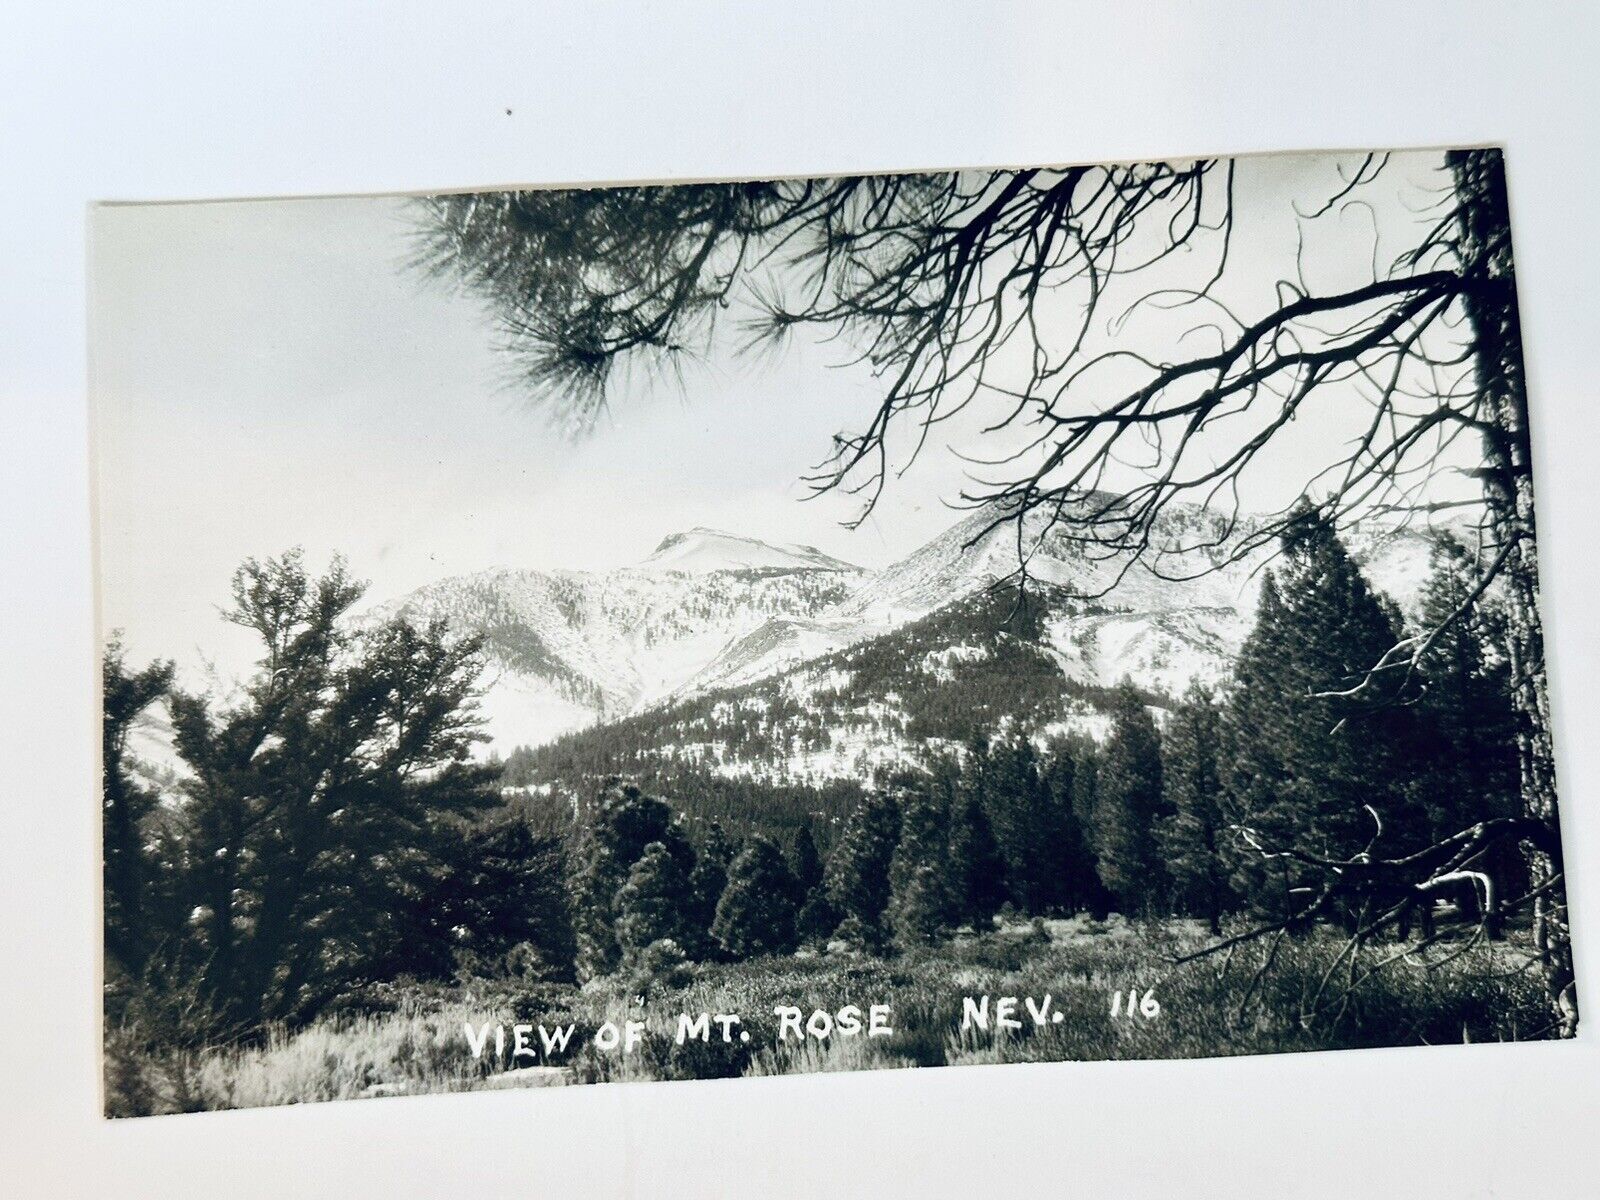 RPPC View of MT. ROSE Nevada Lake Tahoe Photo Postcard #137